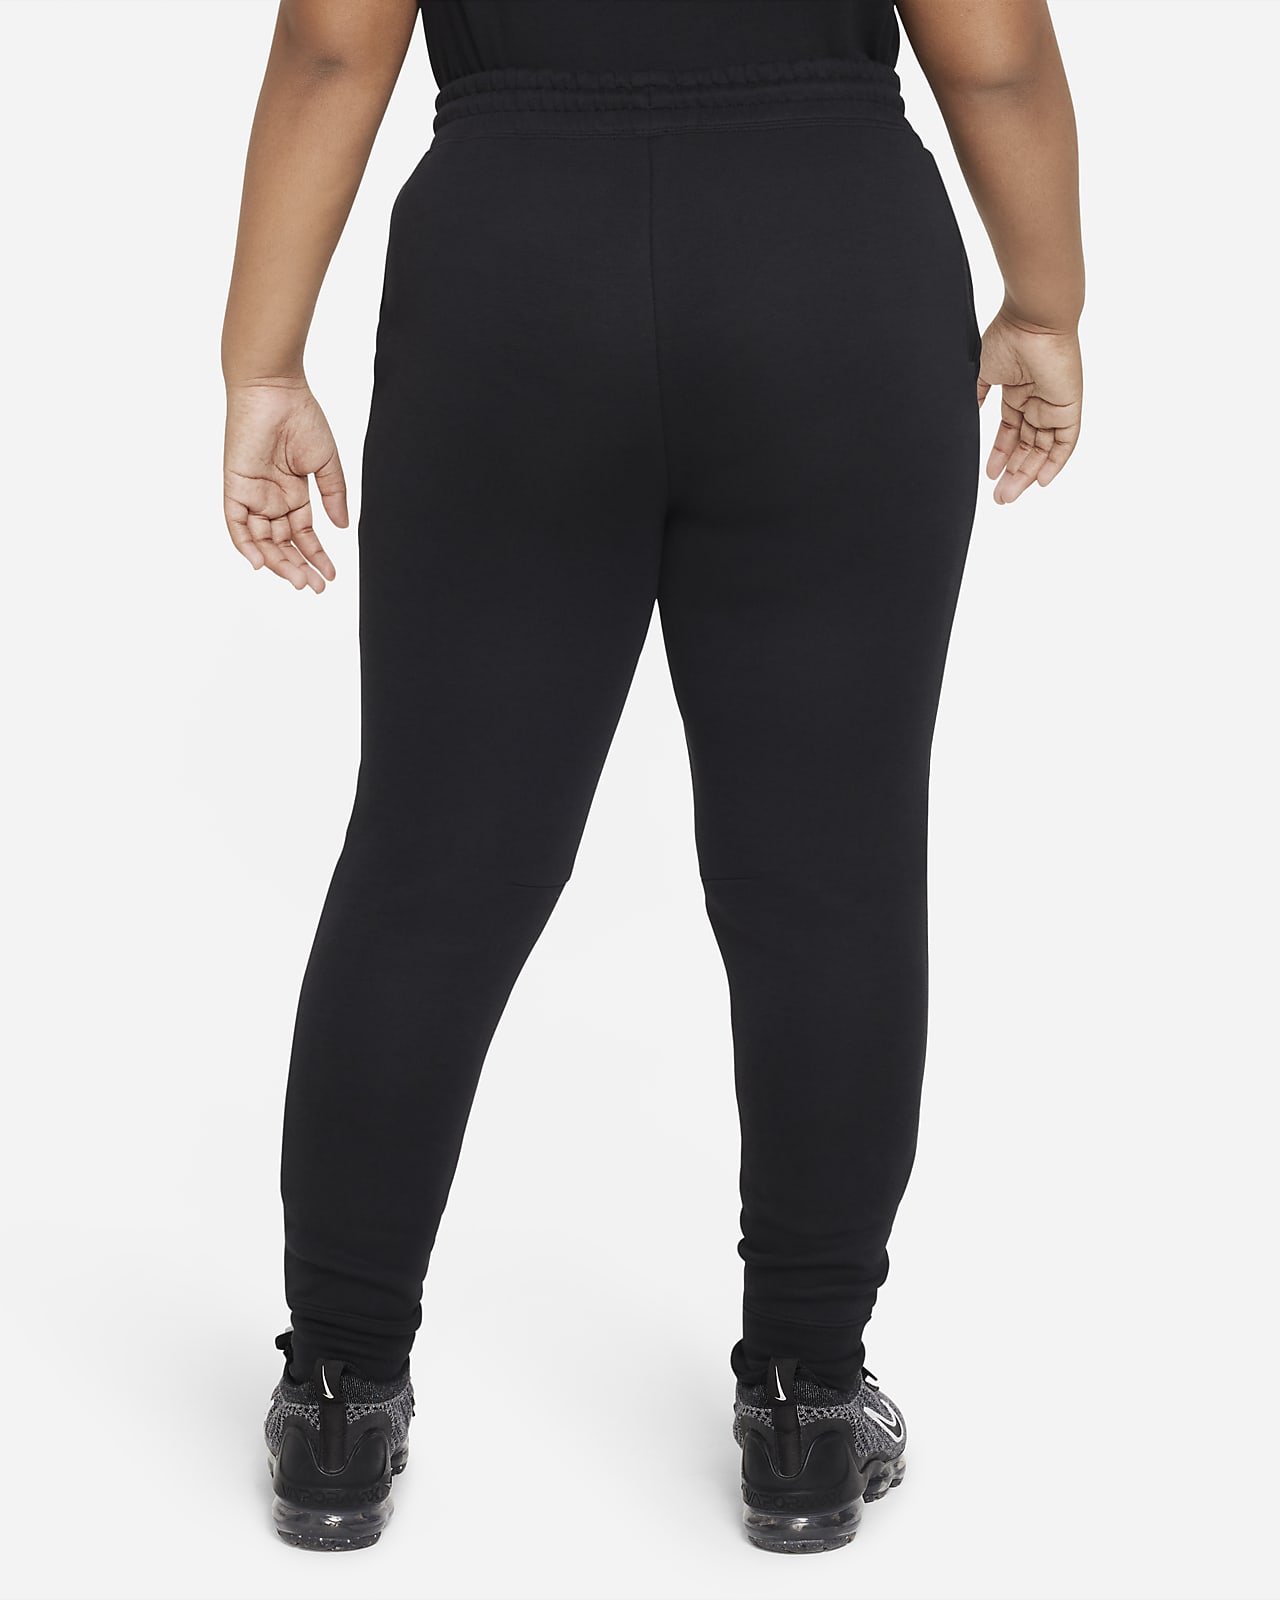 Survêtement Nike Sportswear Tech Fleece pour ado (fille) (taille